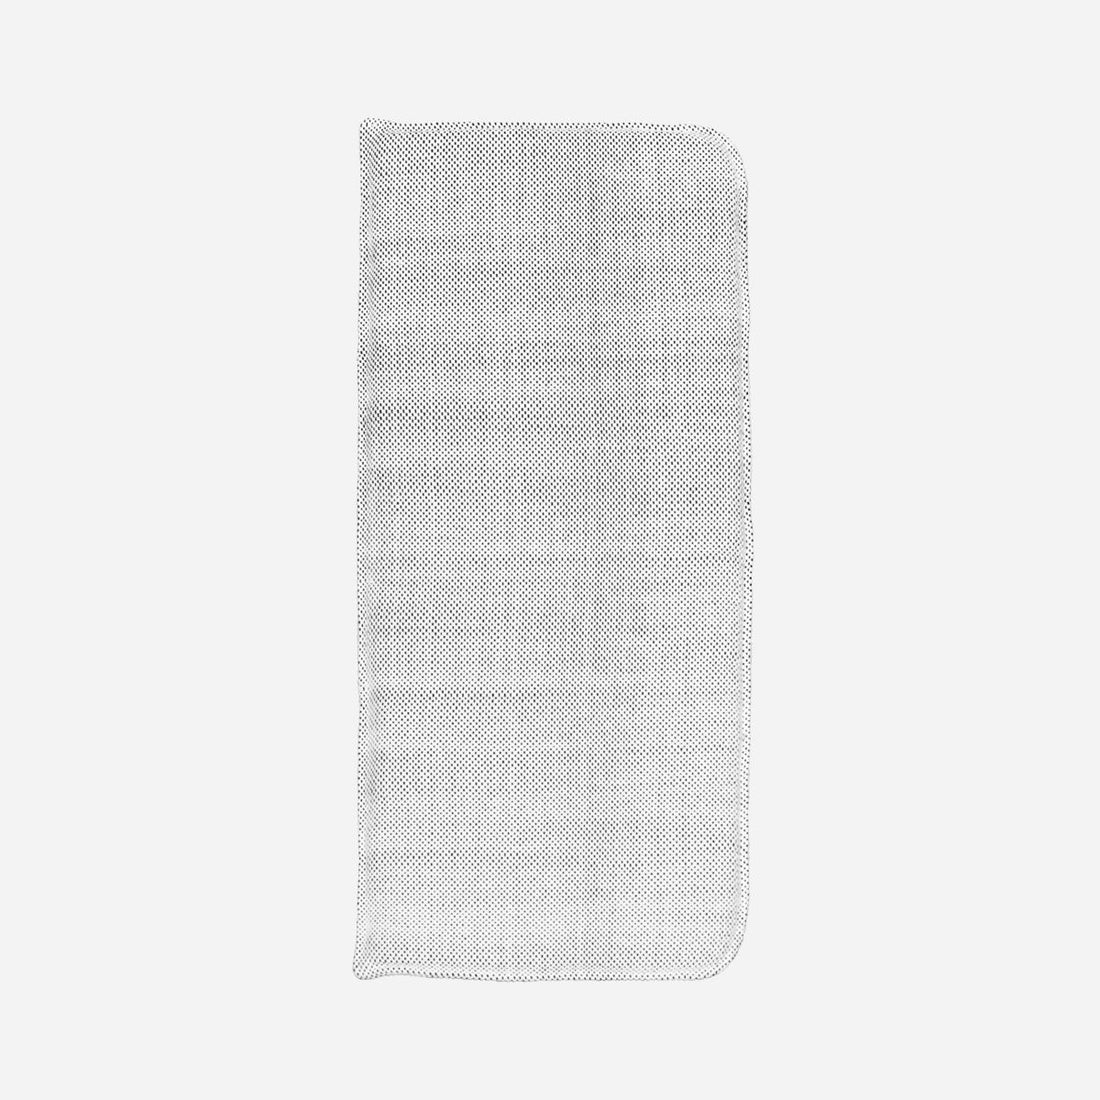 Almofada da casa do médico com preenchimento, cuun, preto e branco: 117 cm, W: 48 cm